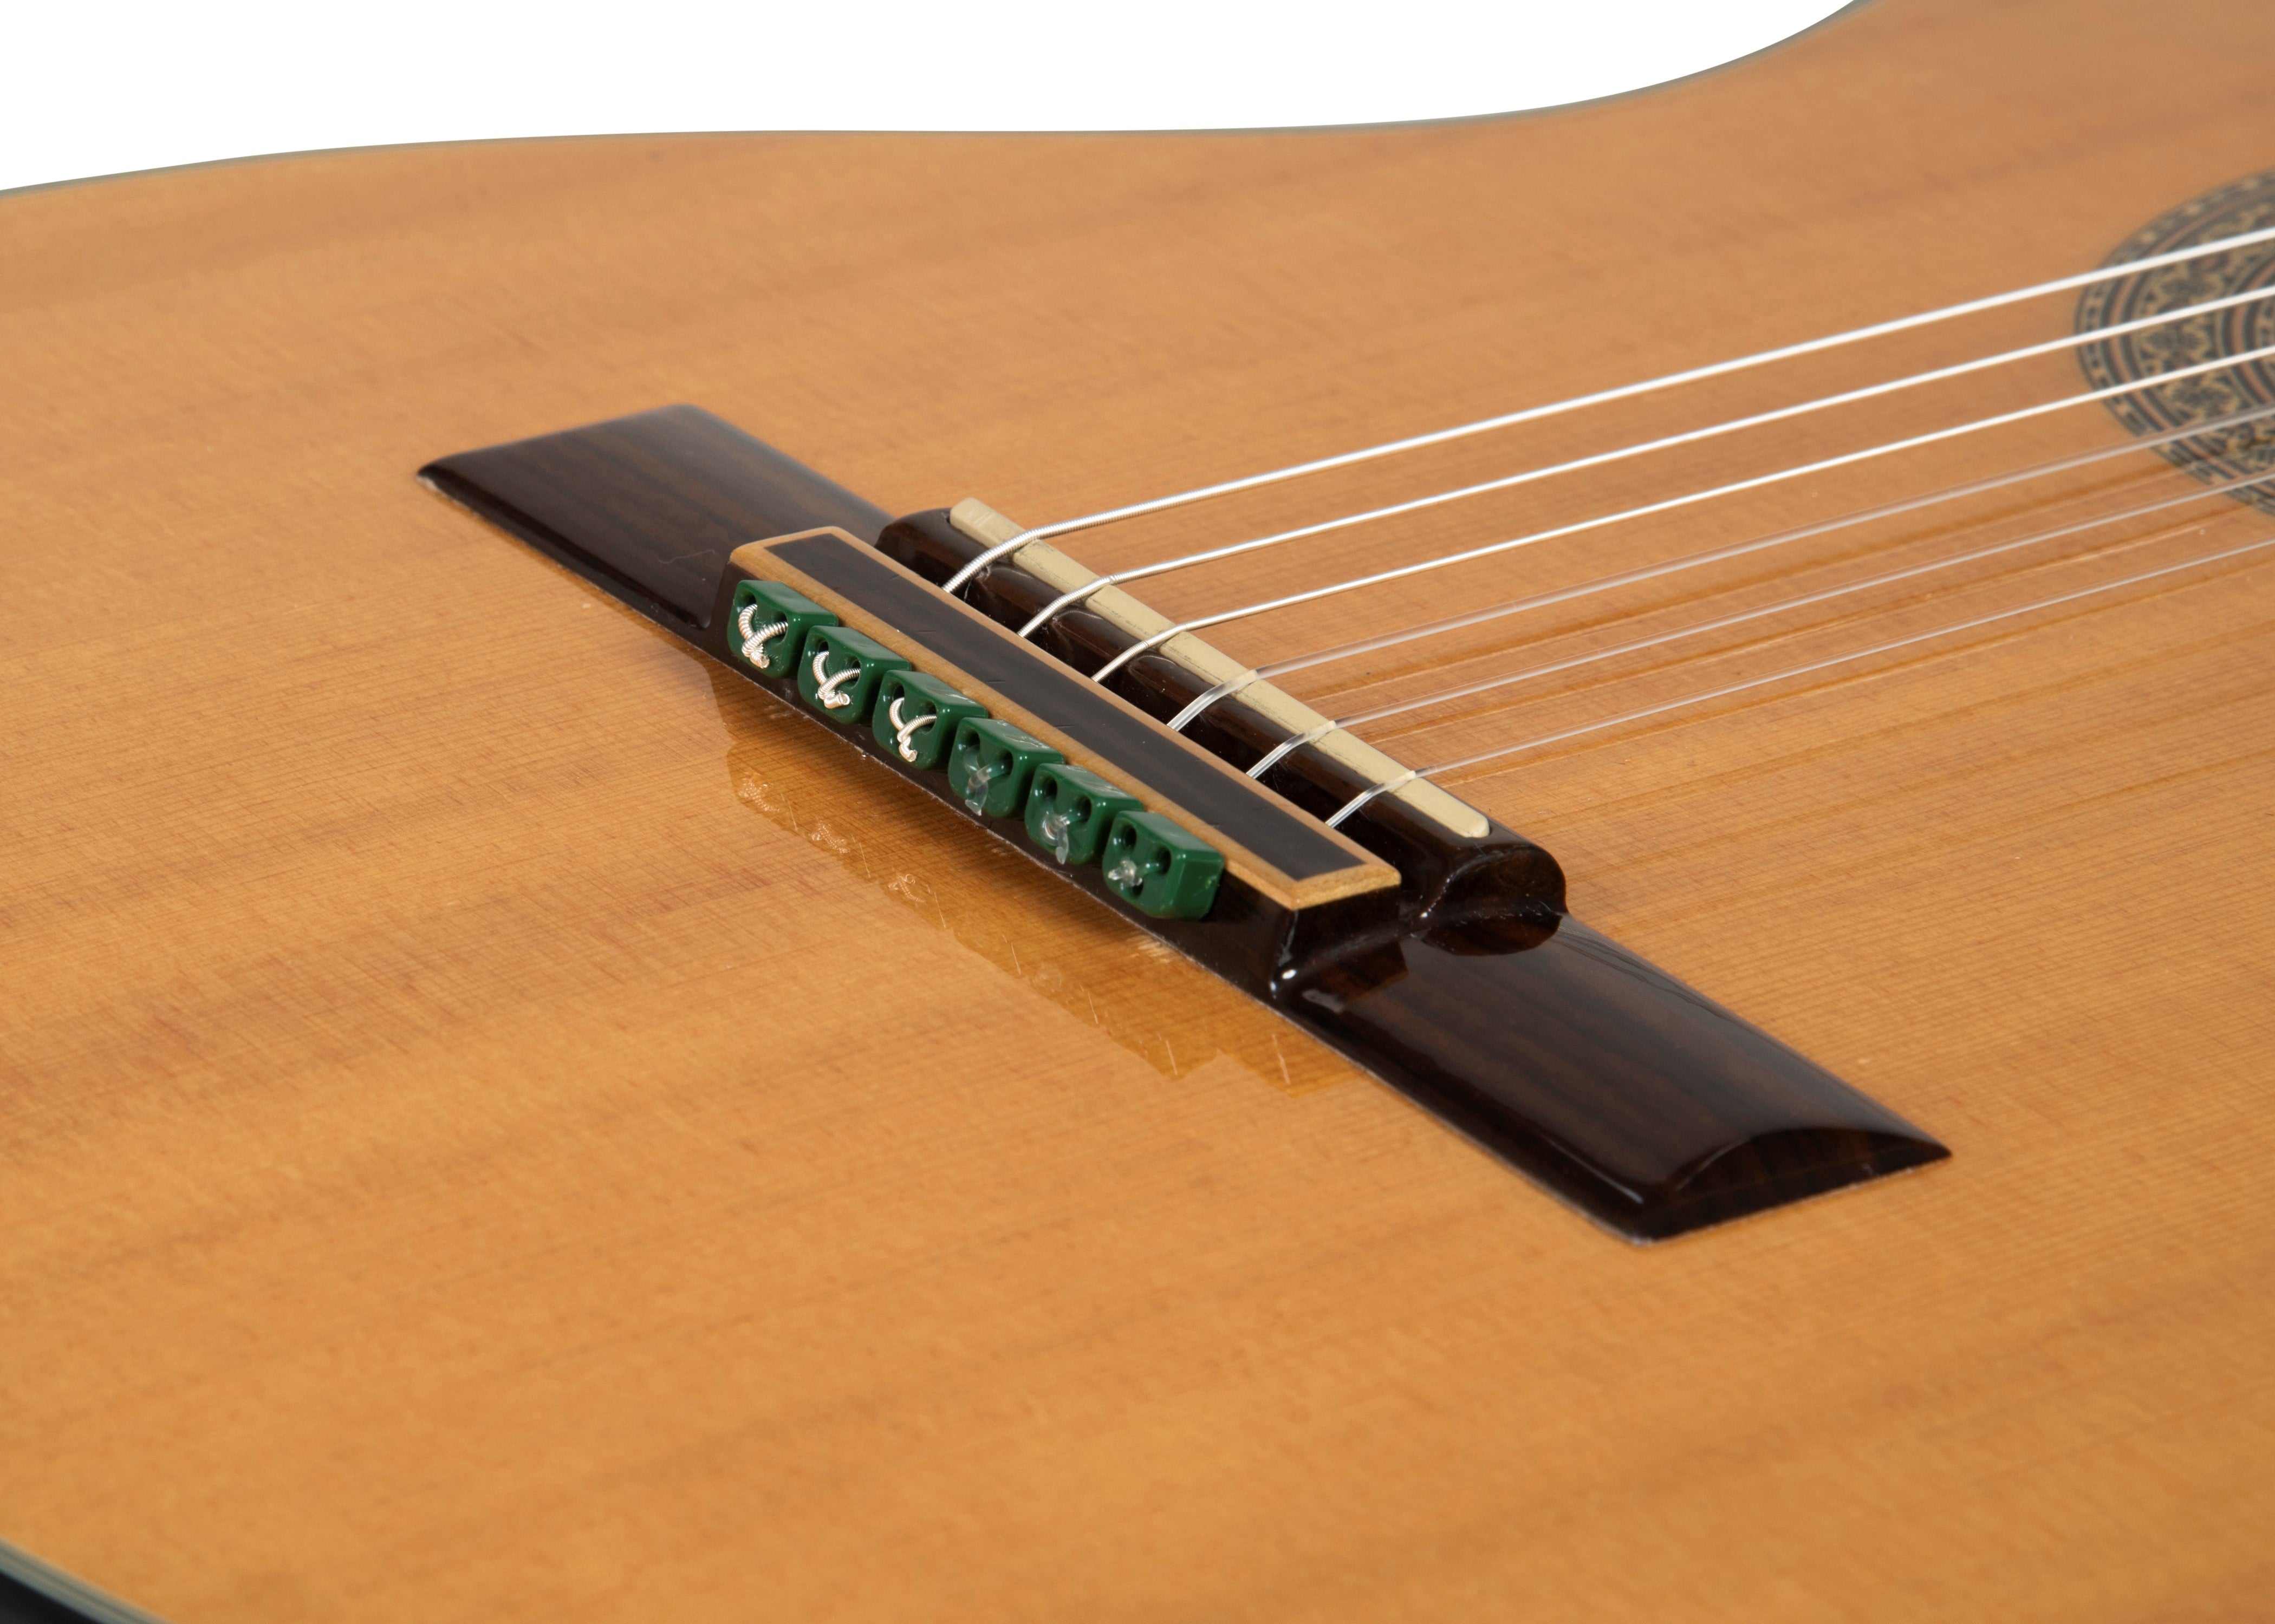 Grüne Alba Guitar Beads für Klassische Gitarren, Flamenco Gitarren- und Akustik Gitarren mit Nylonsaiten